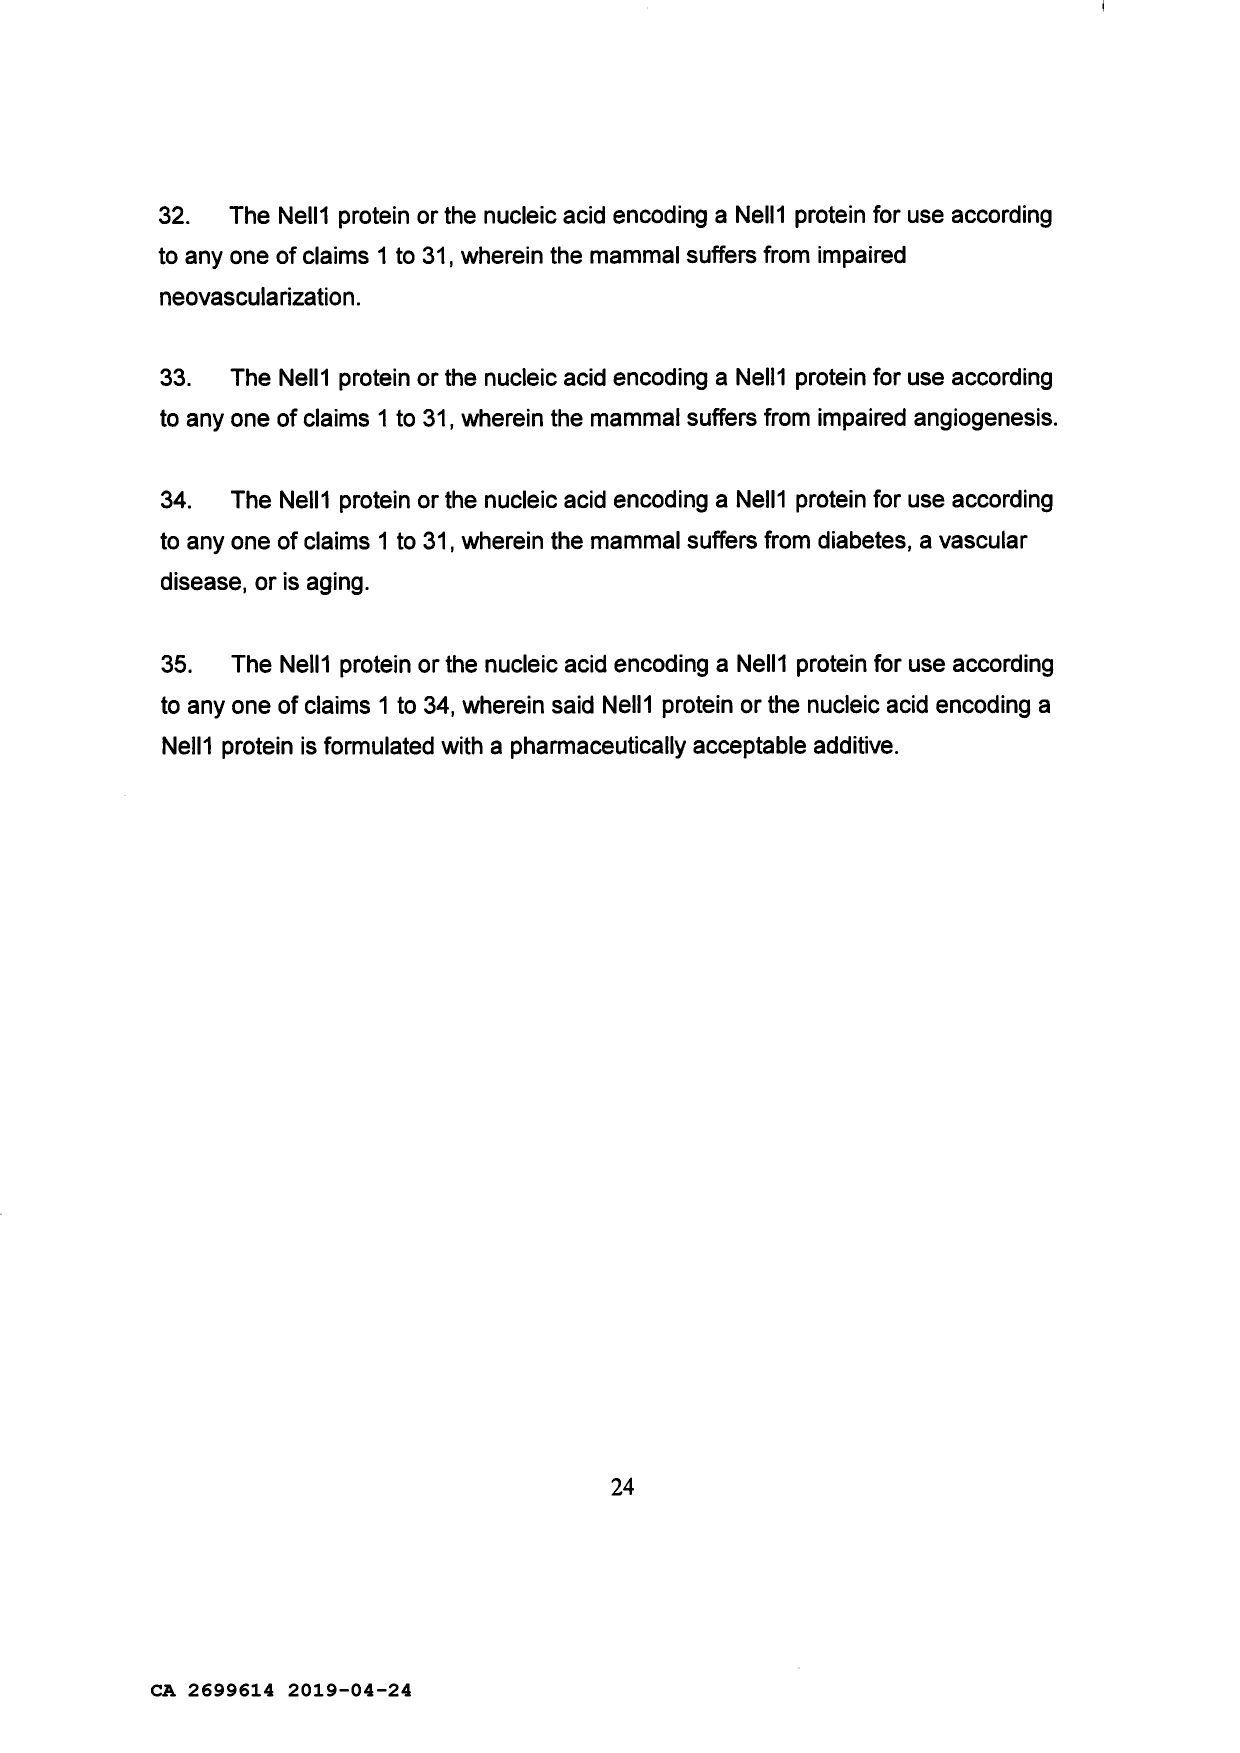 Canadian Patent Document 2699614. Amendment 20190424. Image 10 of 10